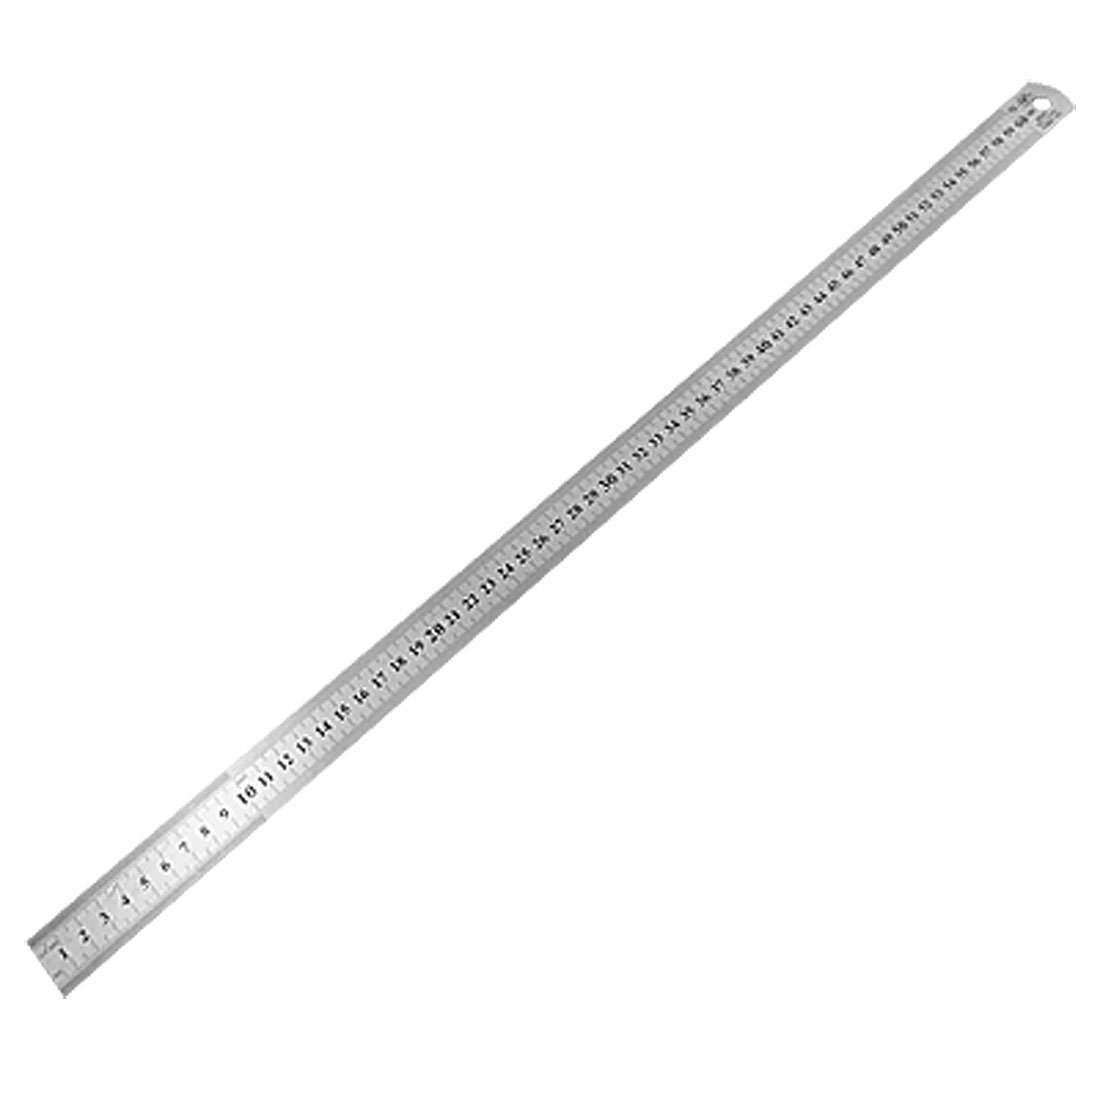 Stainless Measure metric Ruler 60cm